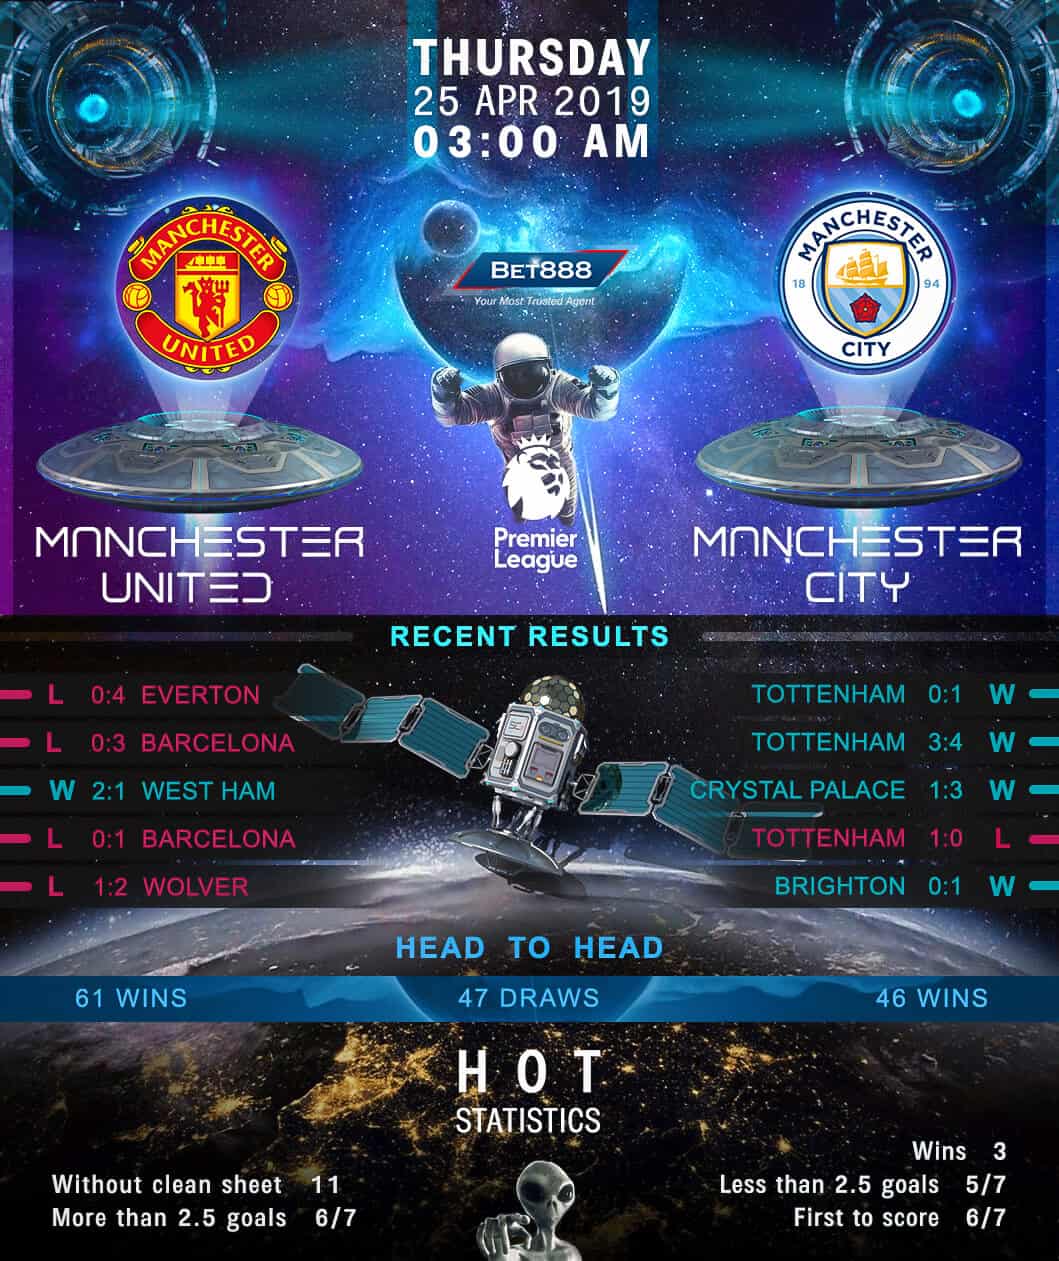 Manchester United vs Manchester City 25/04/19